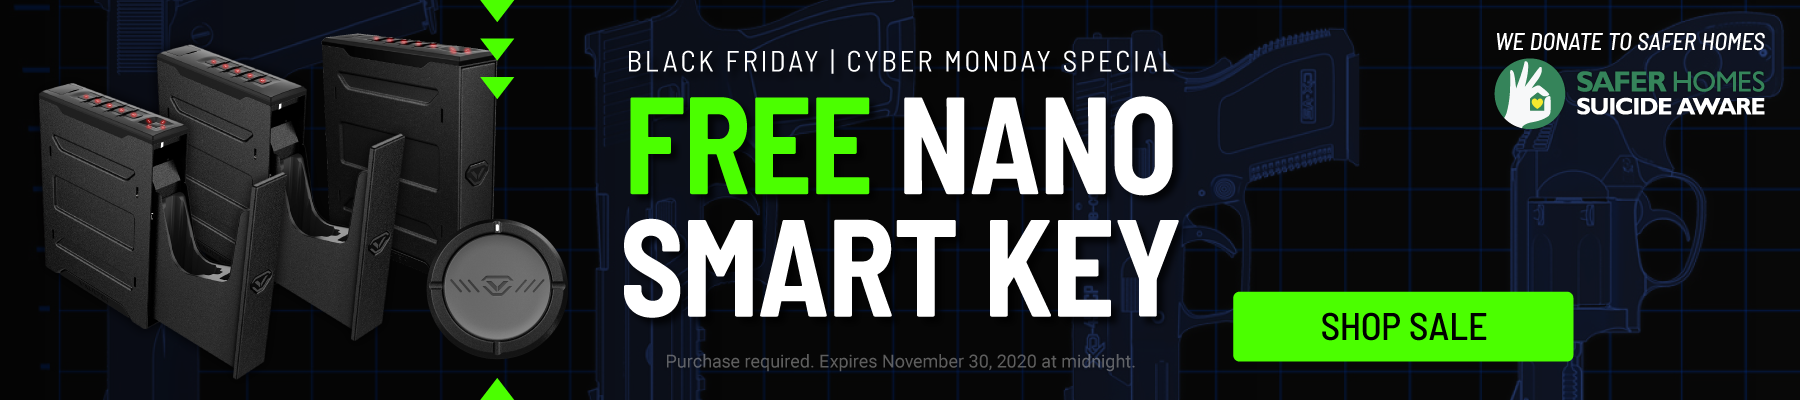 Free Nano Smart Key with Purchase of Vaultek Pistol Safe